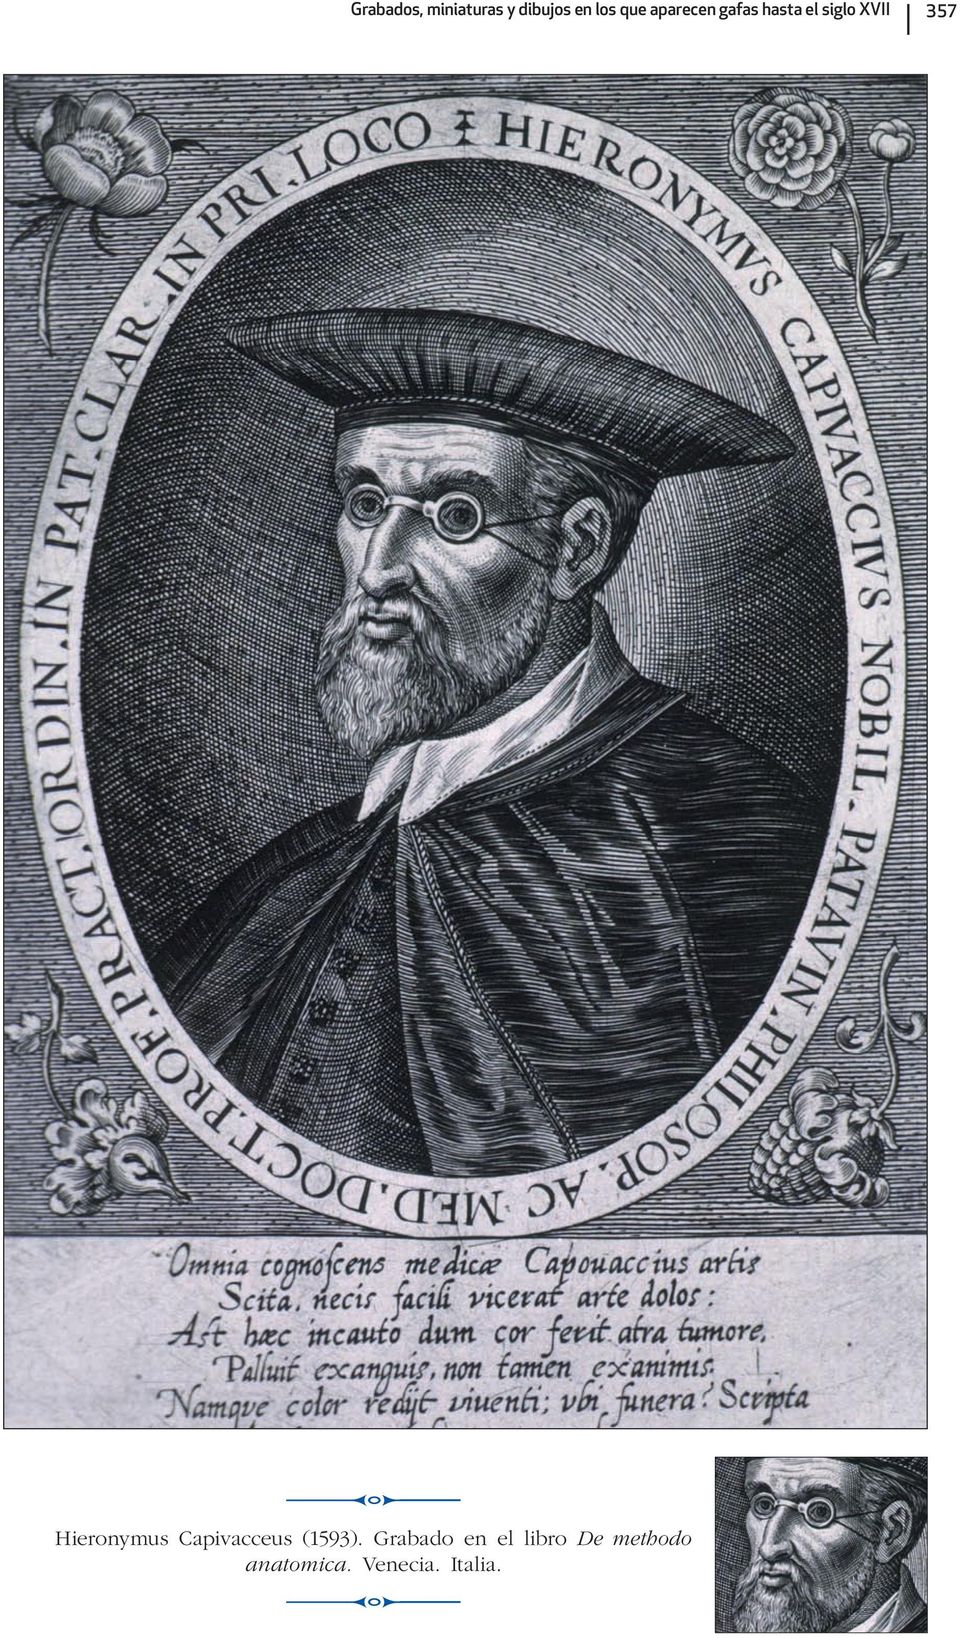 Hieronymus Capivacceus (1593).